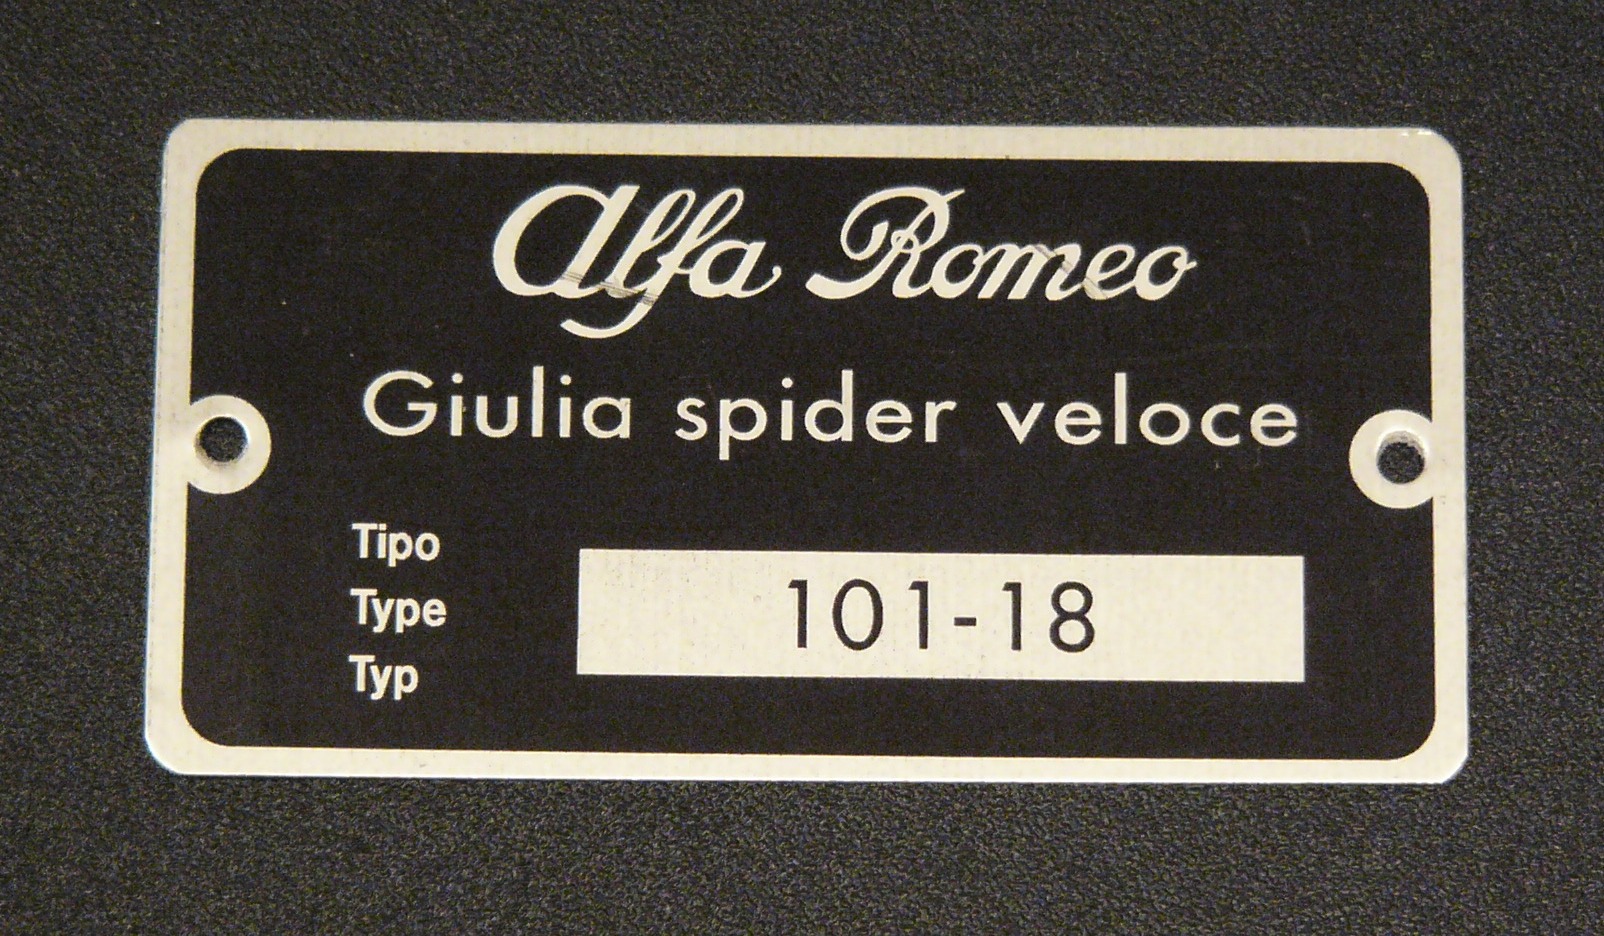 Alfa Romeo data plate #ardp105